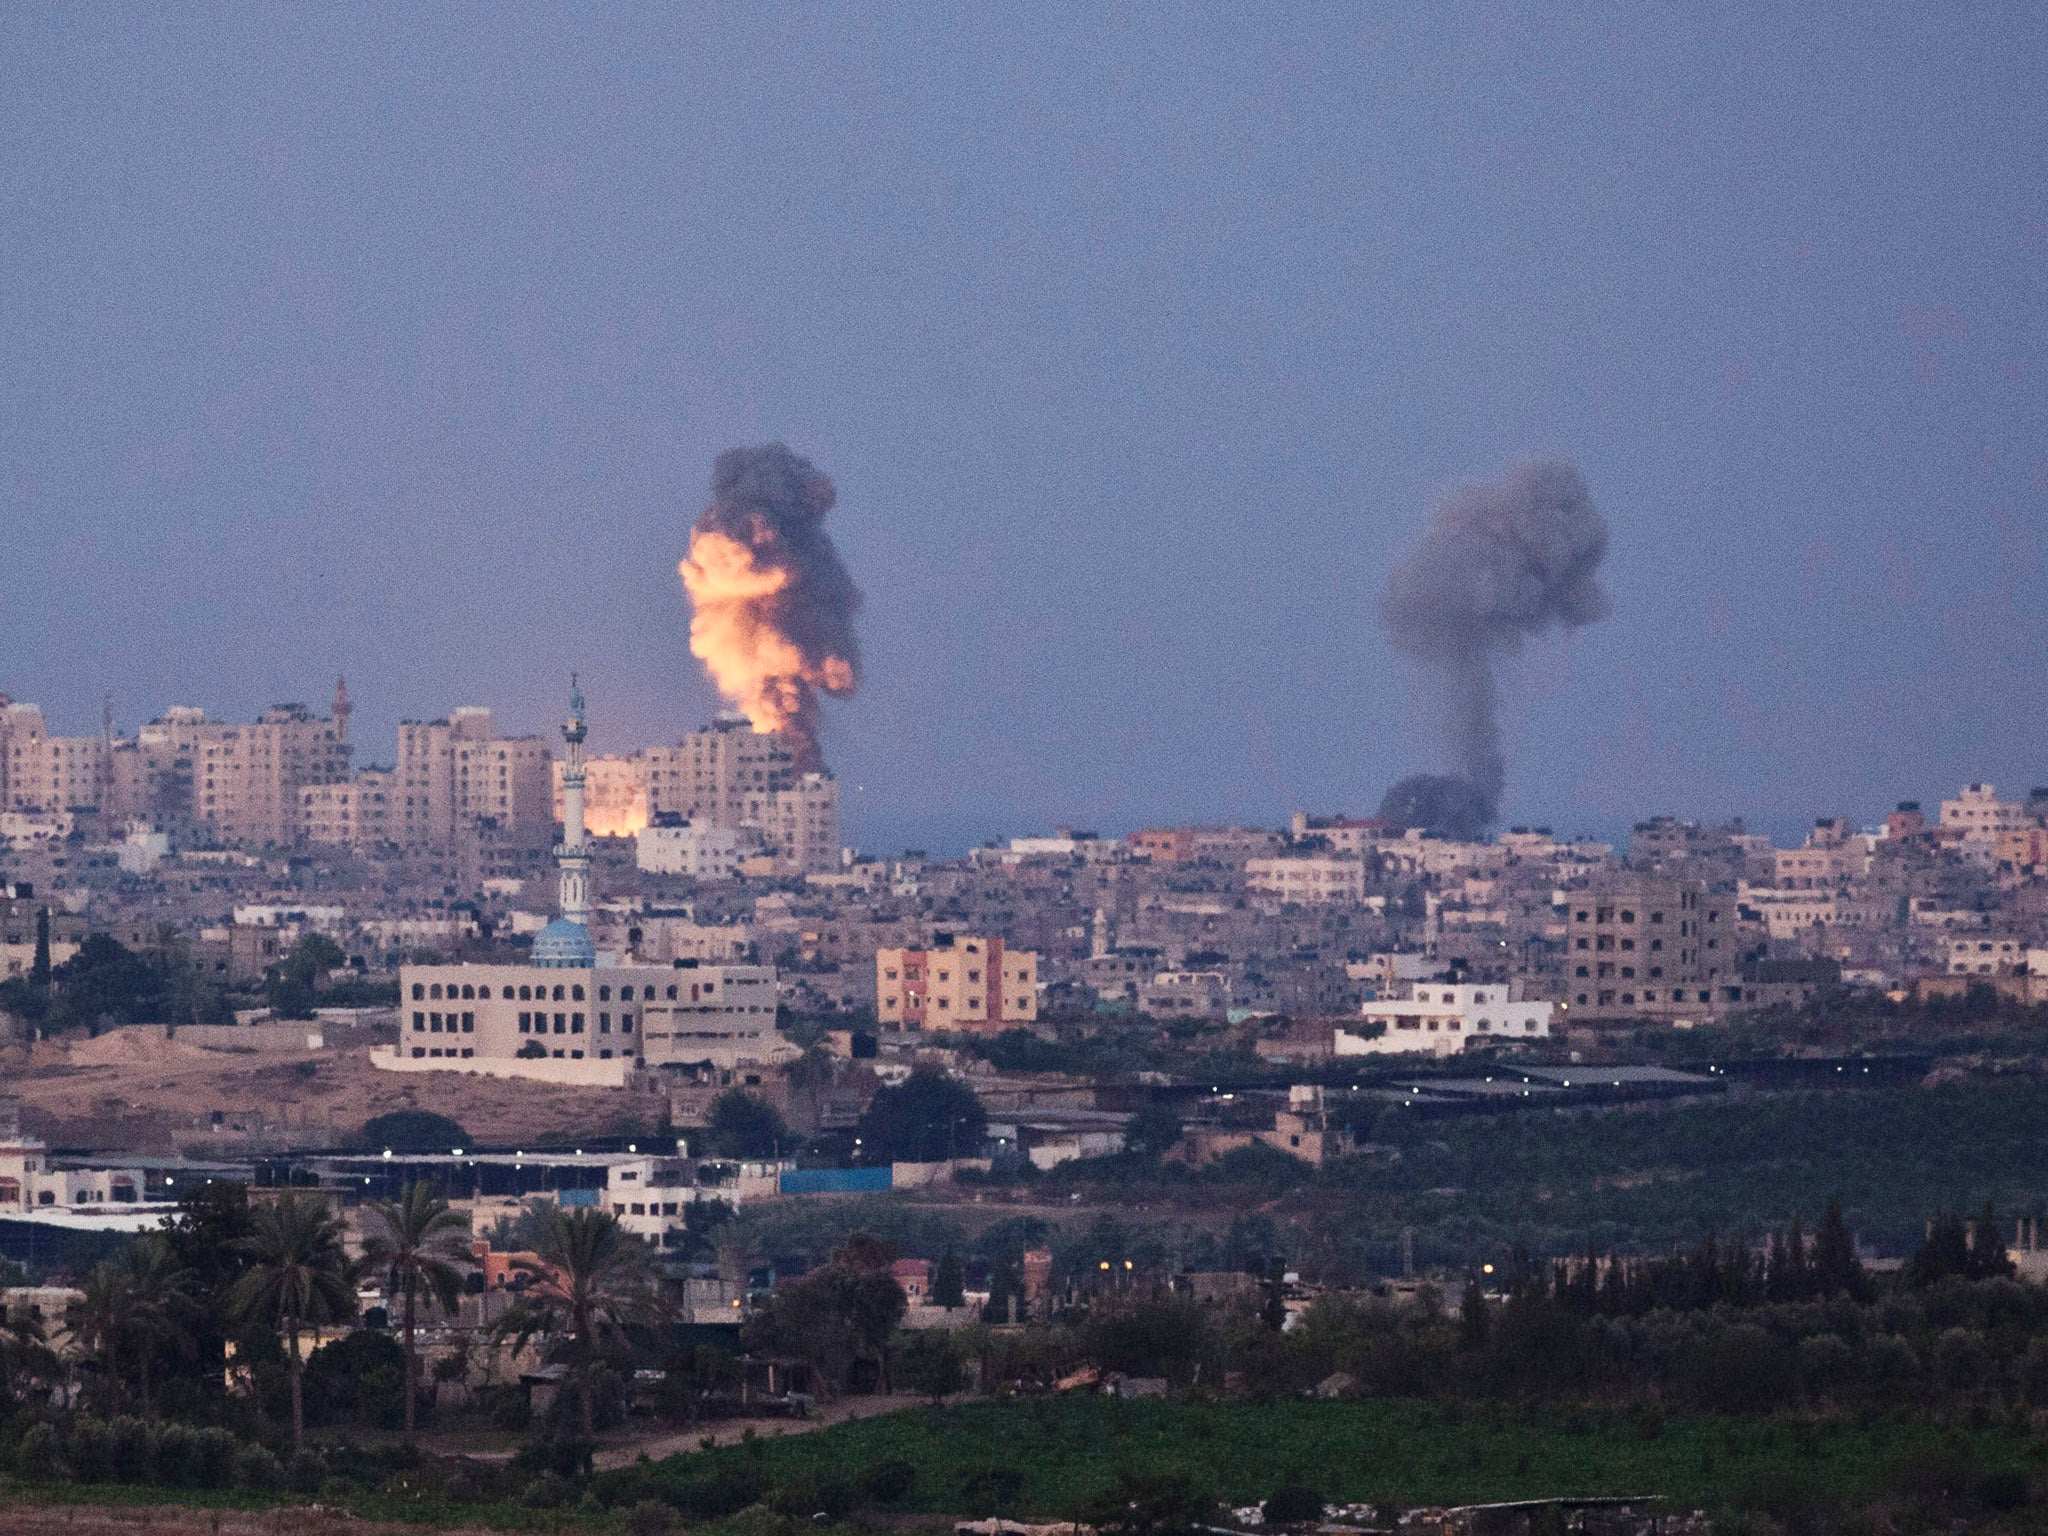 The conflict in Gaza intensifies